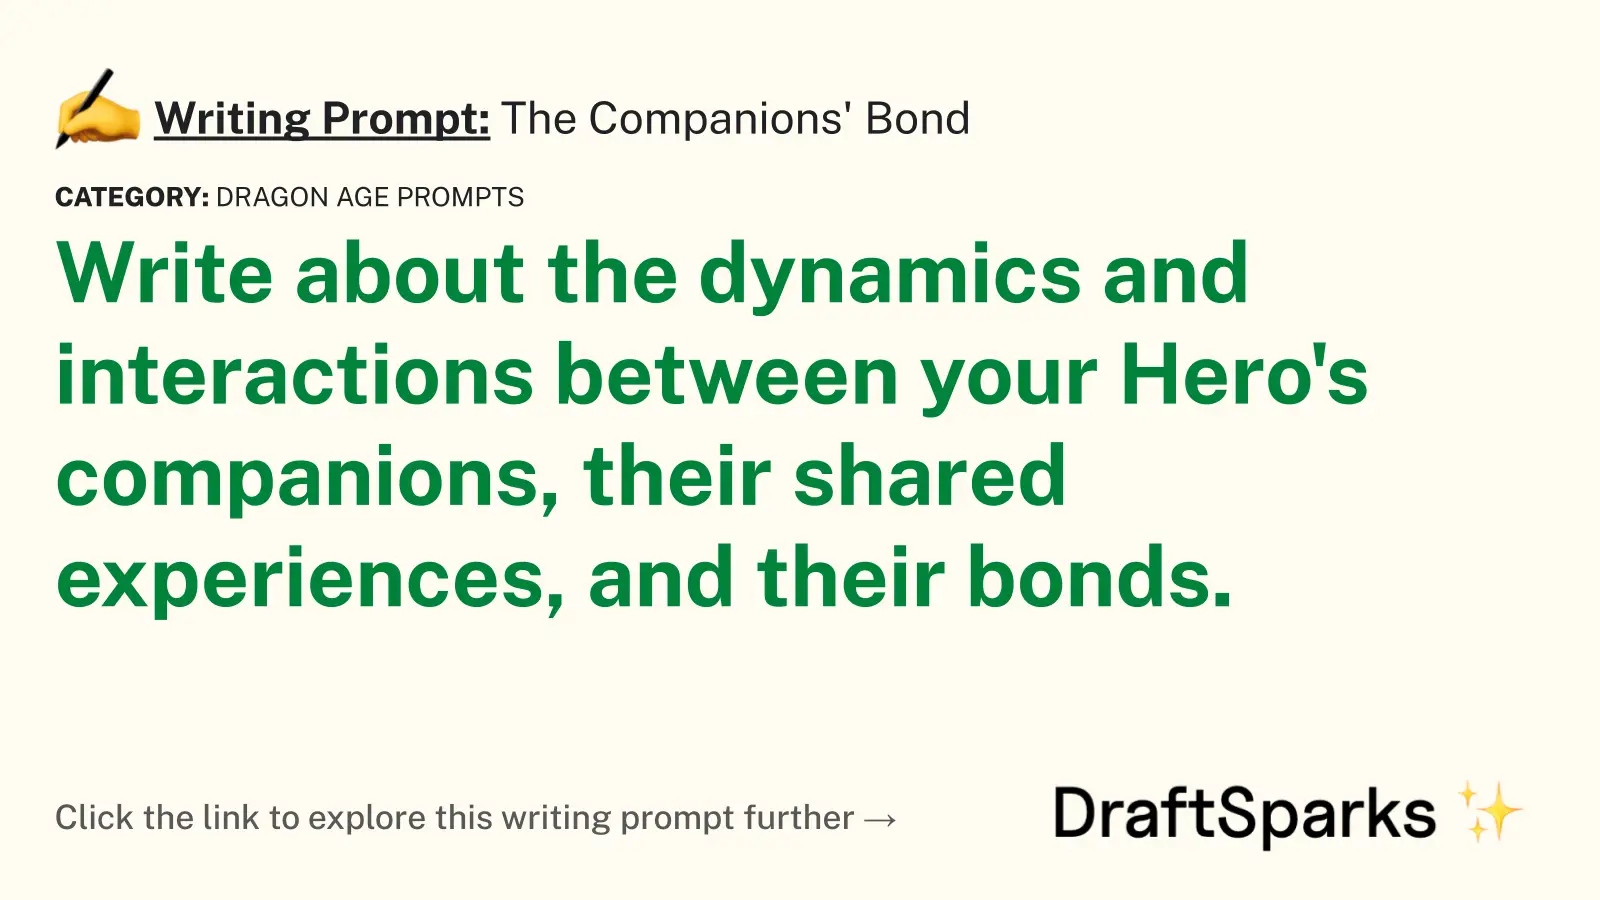 The Companions’ Bond